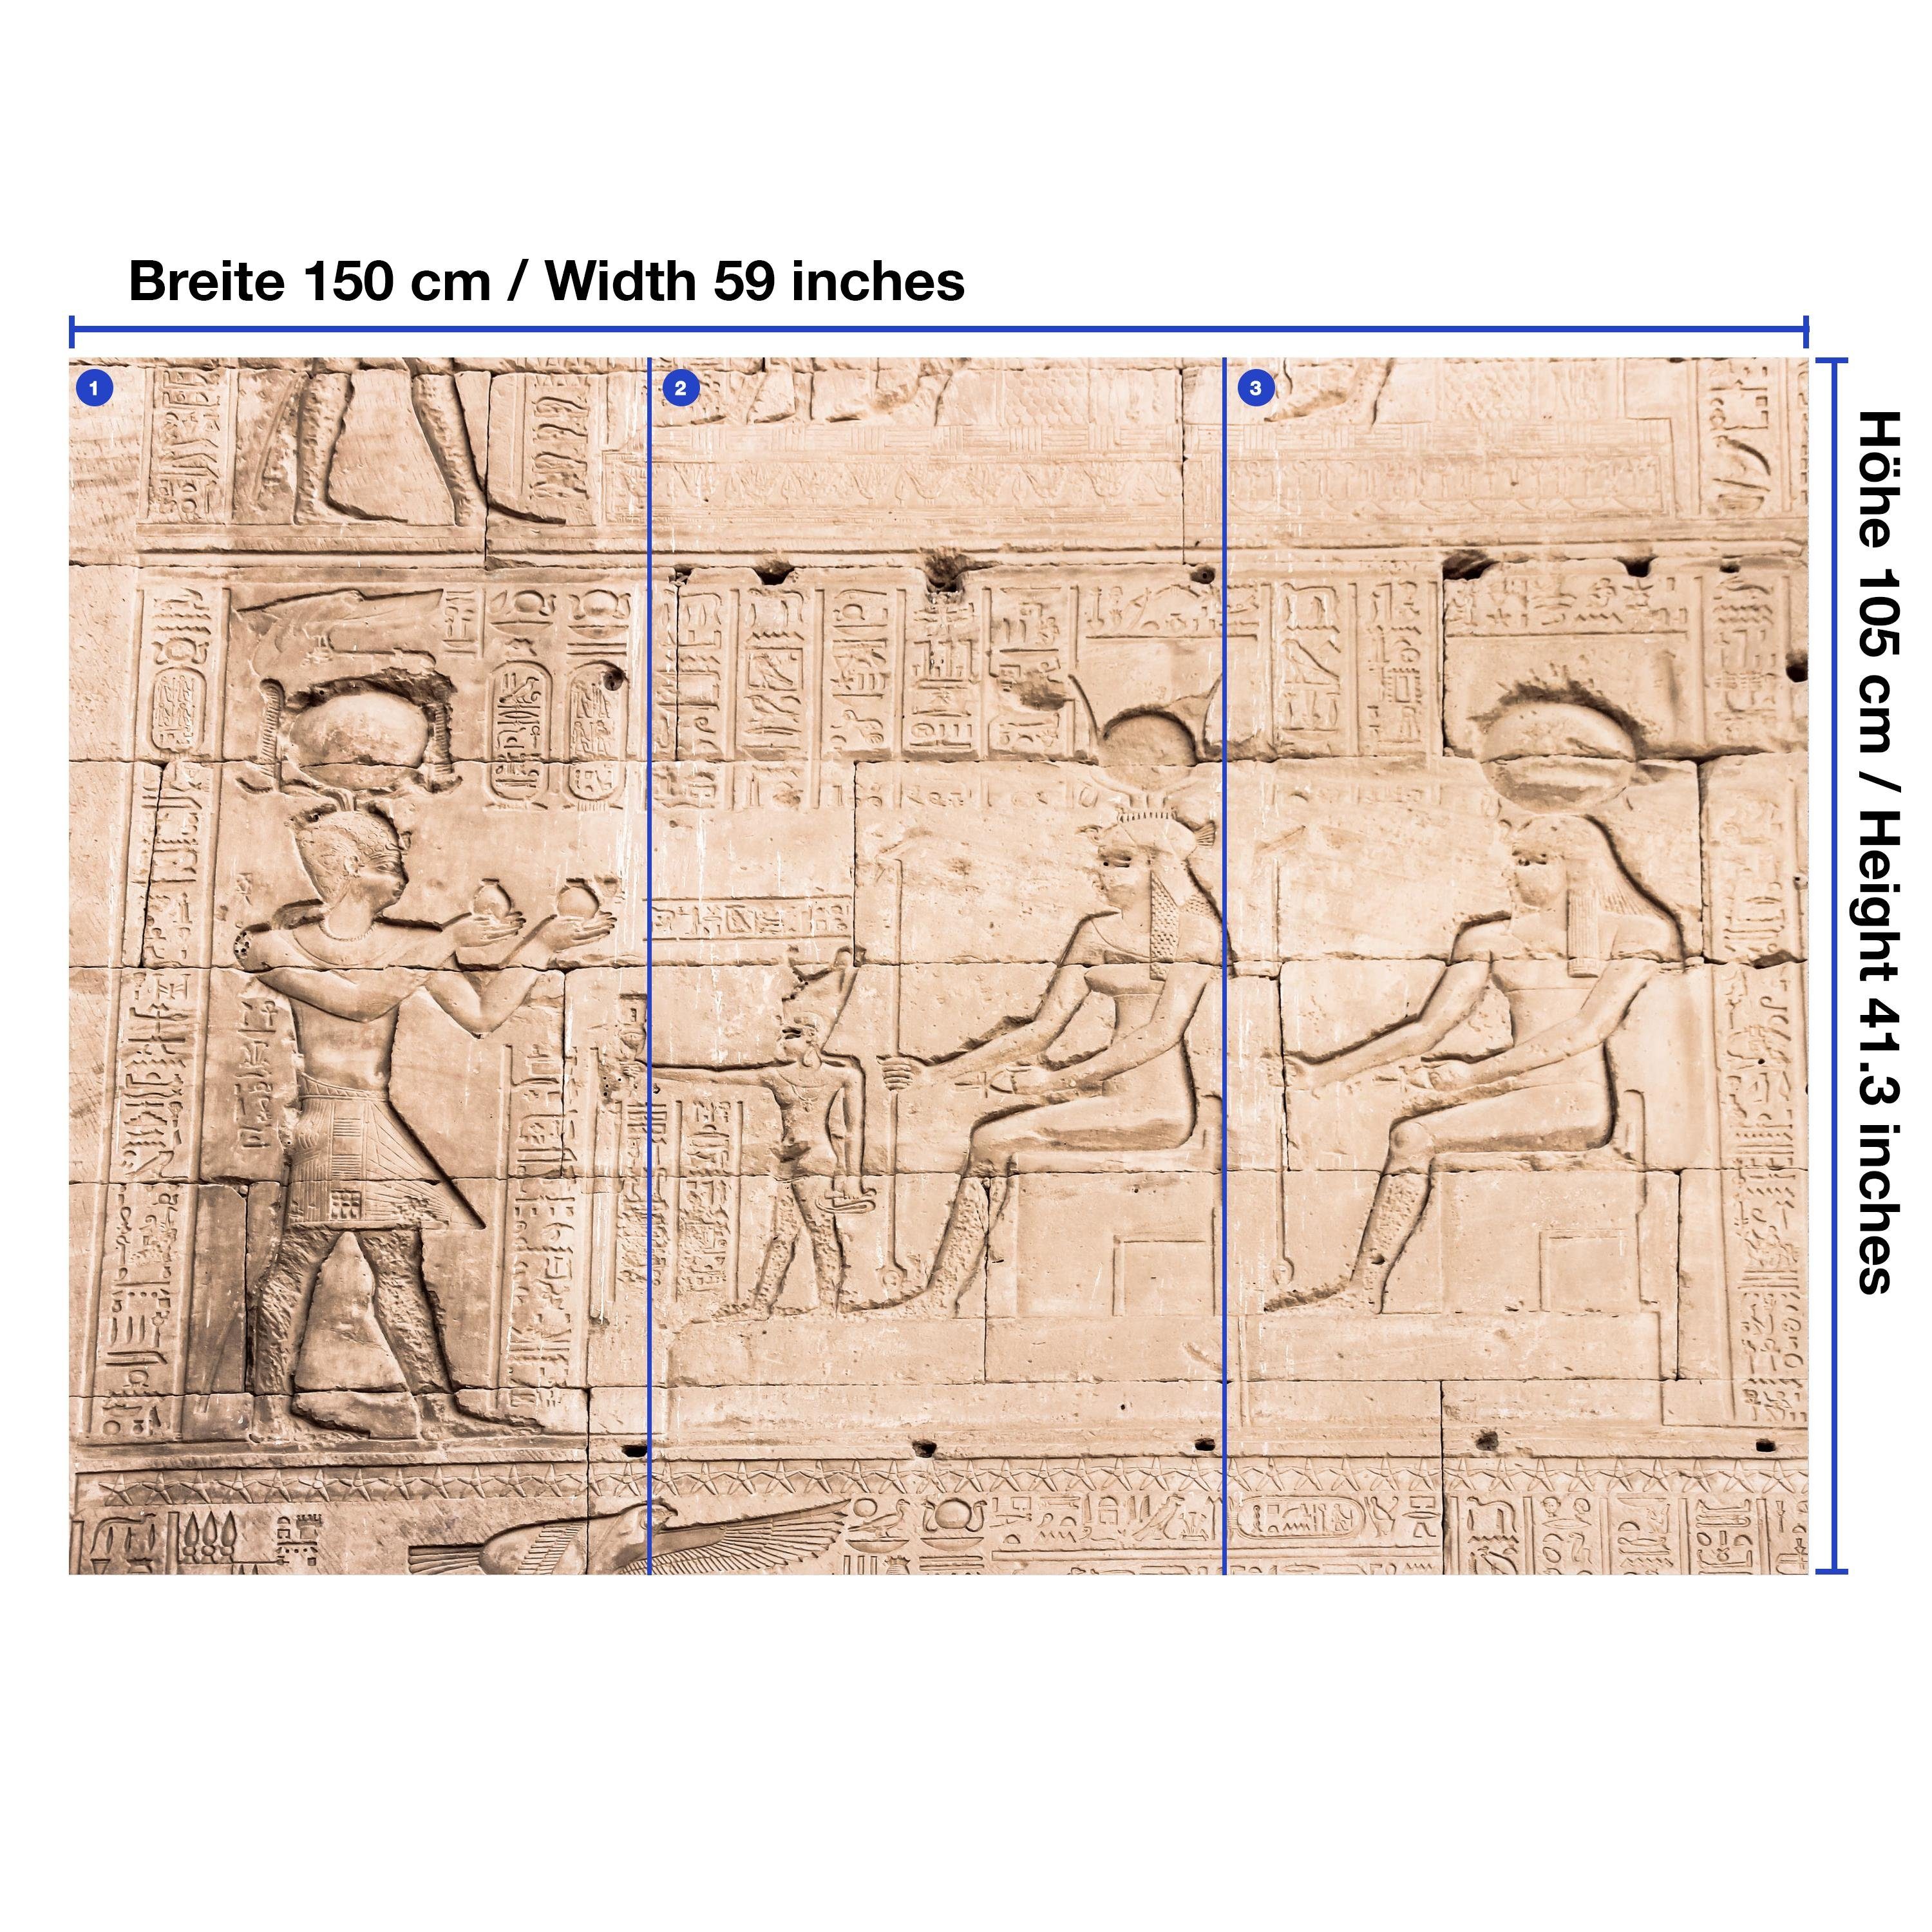 wandmotiv24 Fototapete Motivtapete, bei von Dendera, Vliestapete matt, Mauer Tempels des glatt, Wandtapete, Hathor